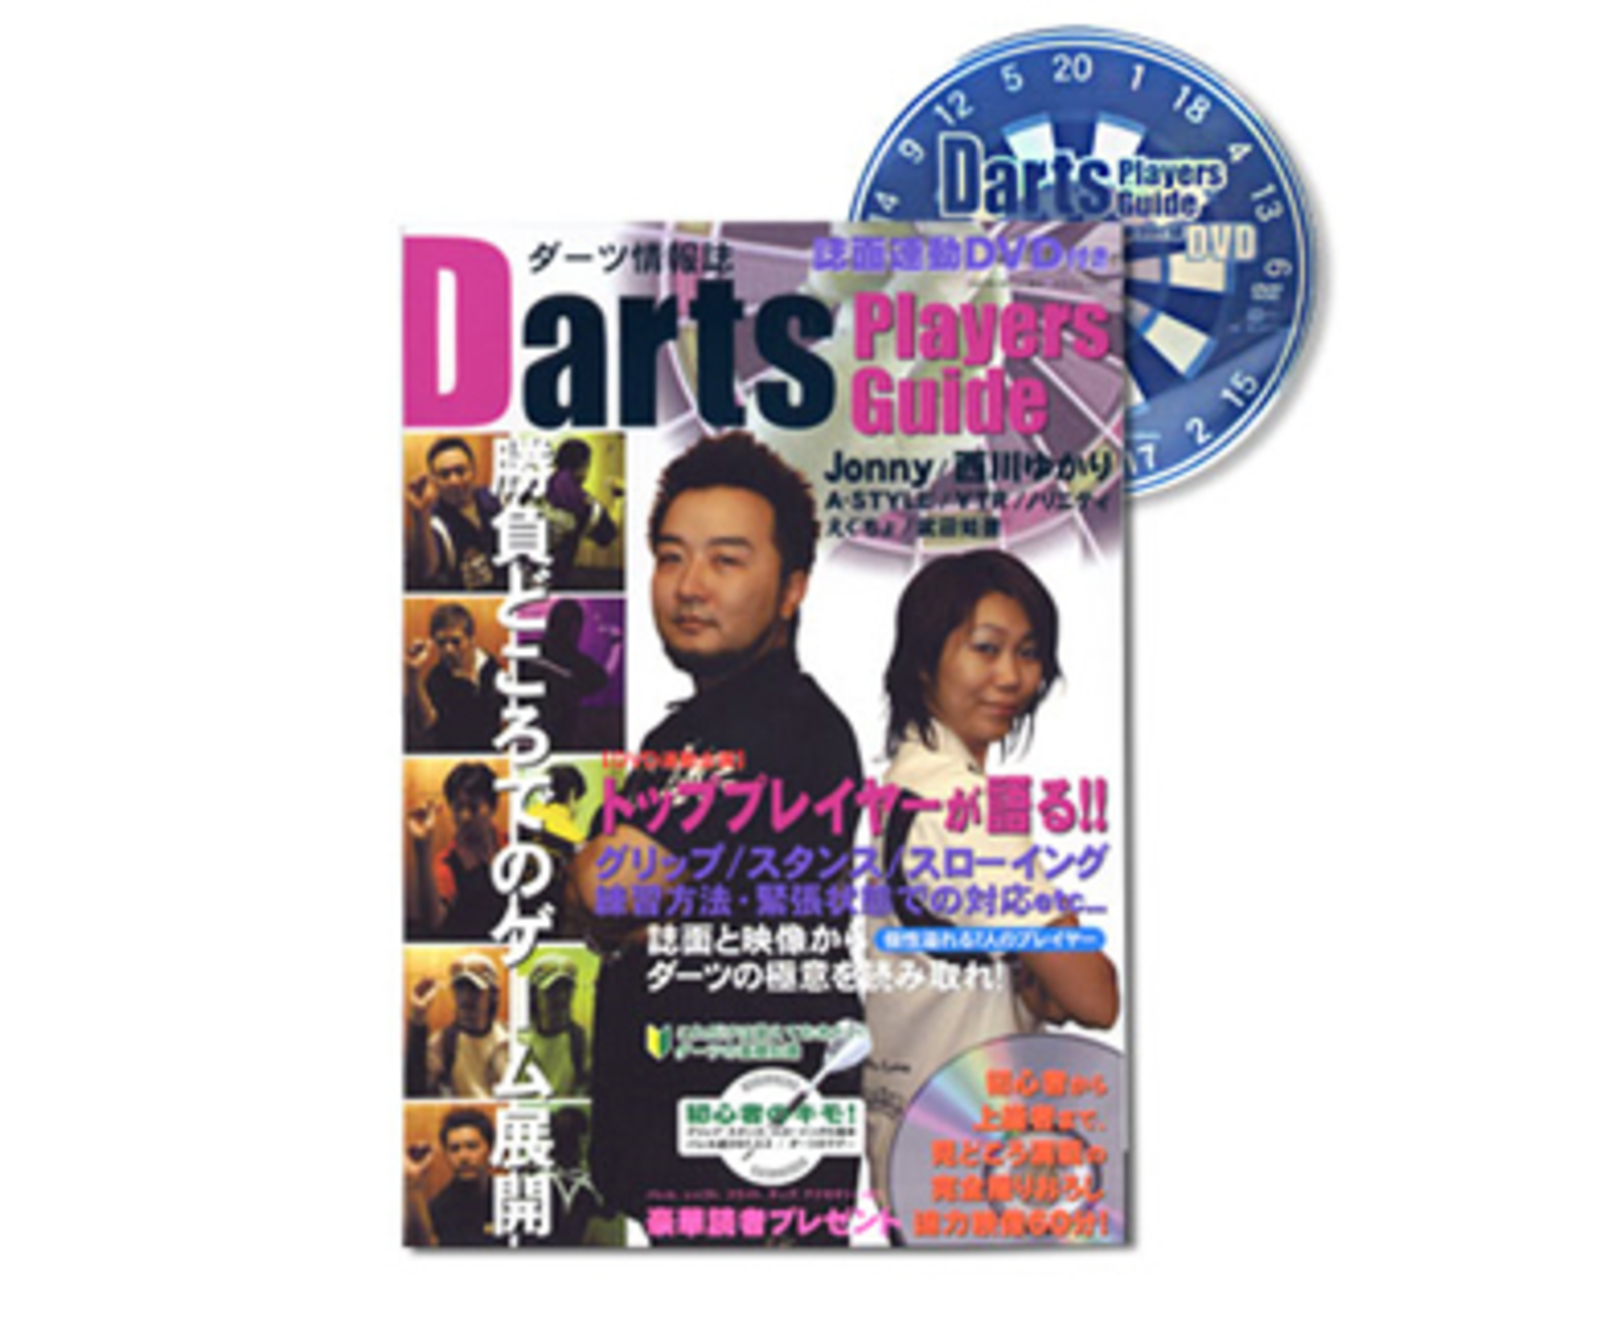  DartsPlayersGuide(DVDդ)β